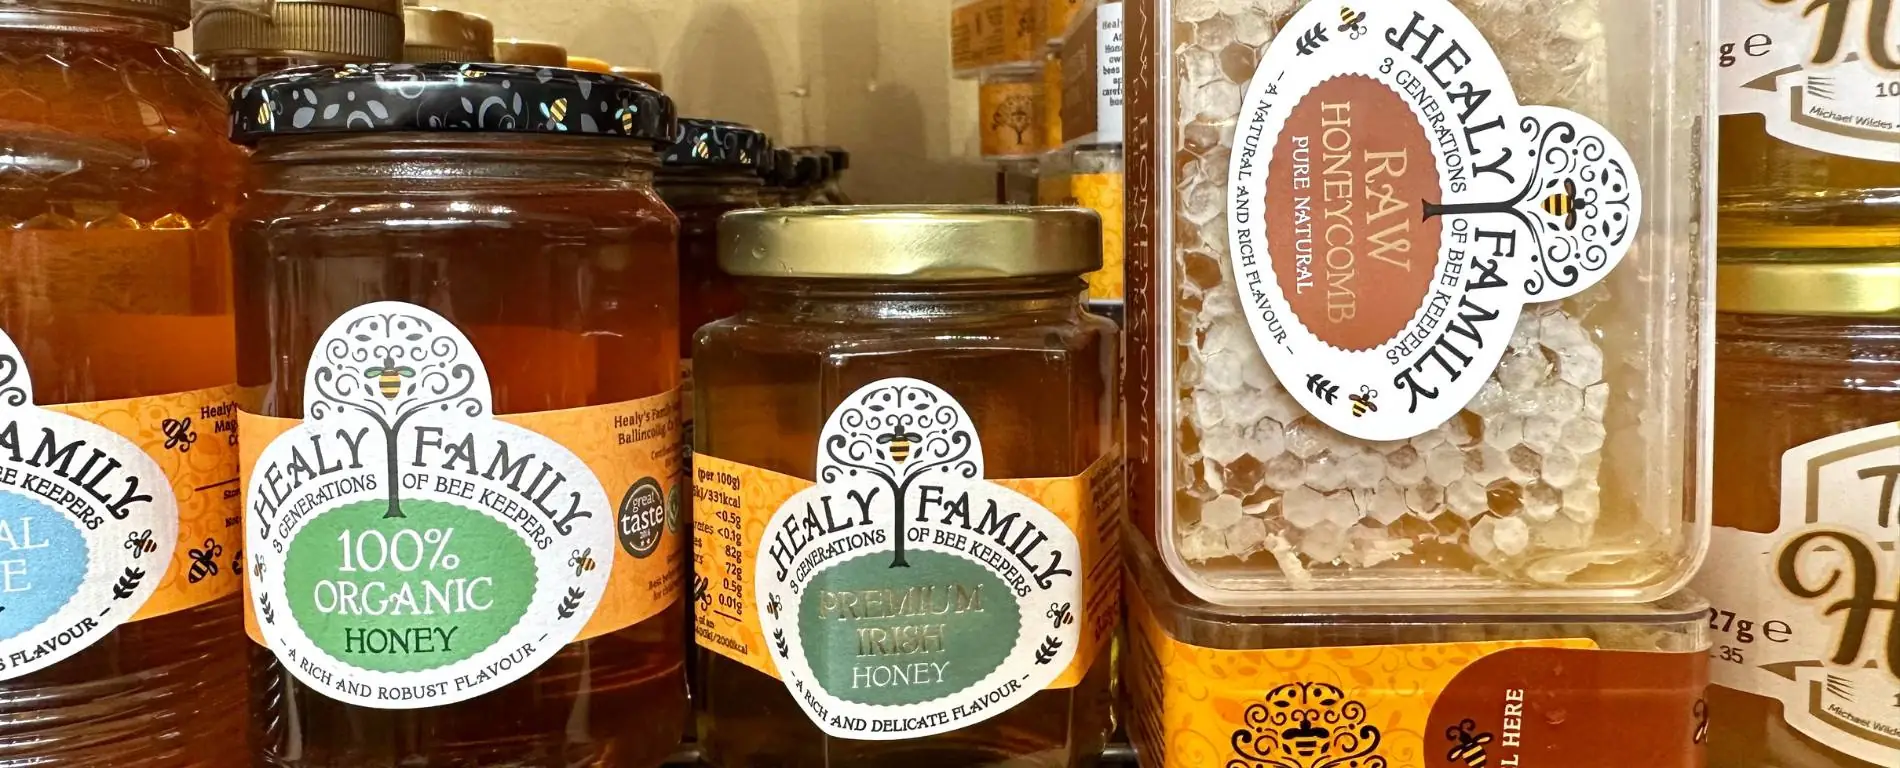 Honey selection